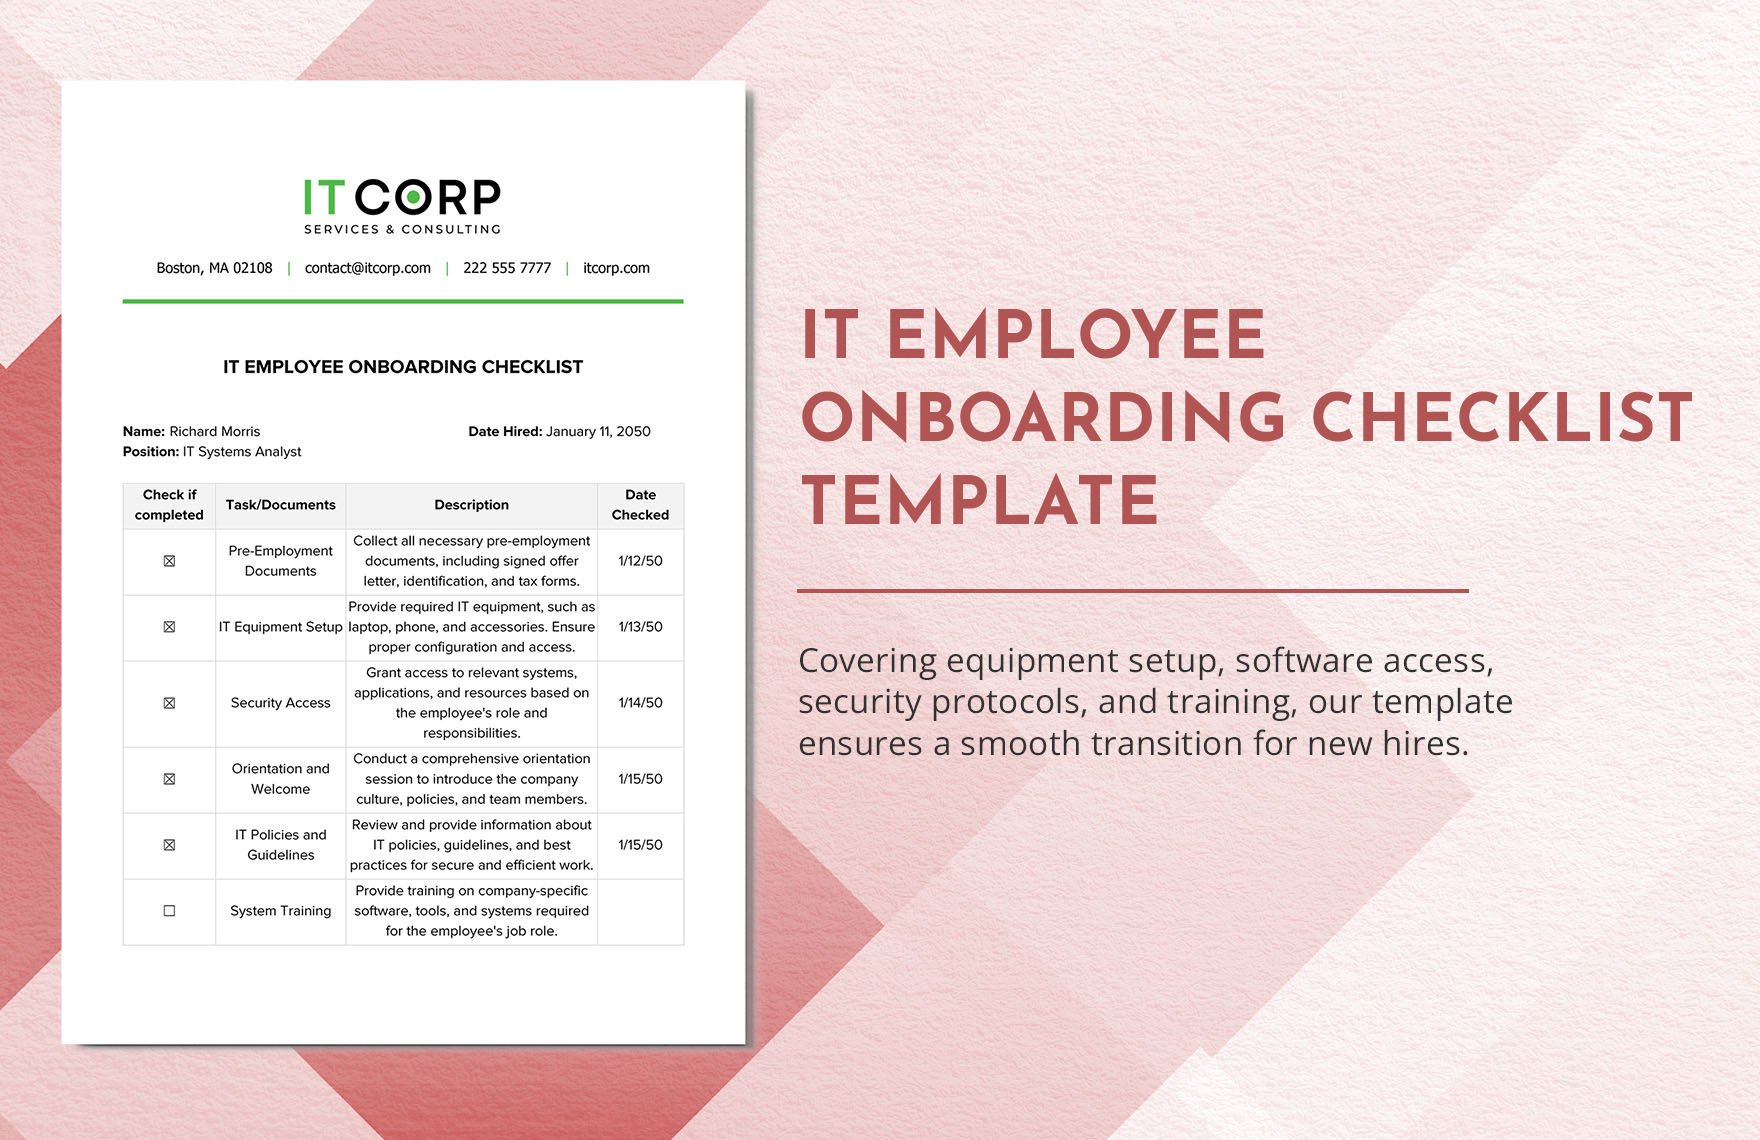 IT Employee Onboarding Checklist Template